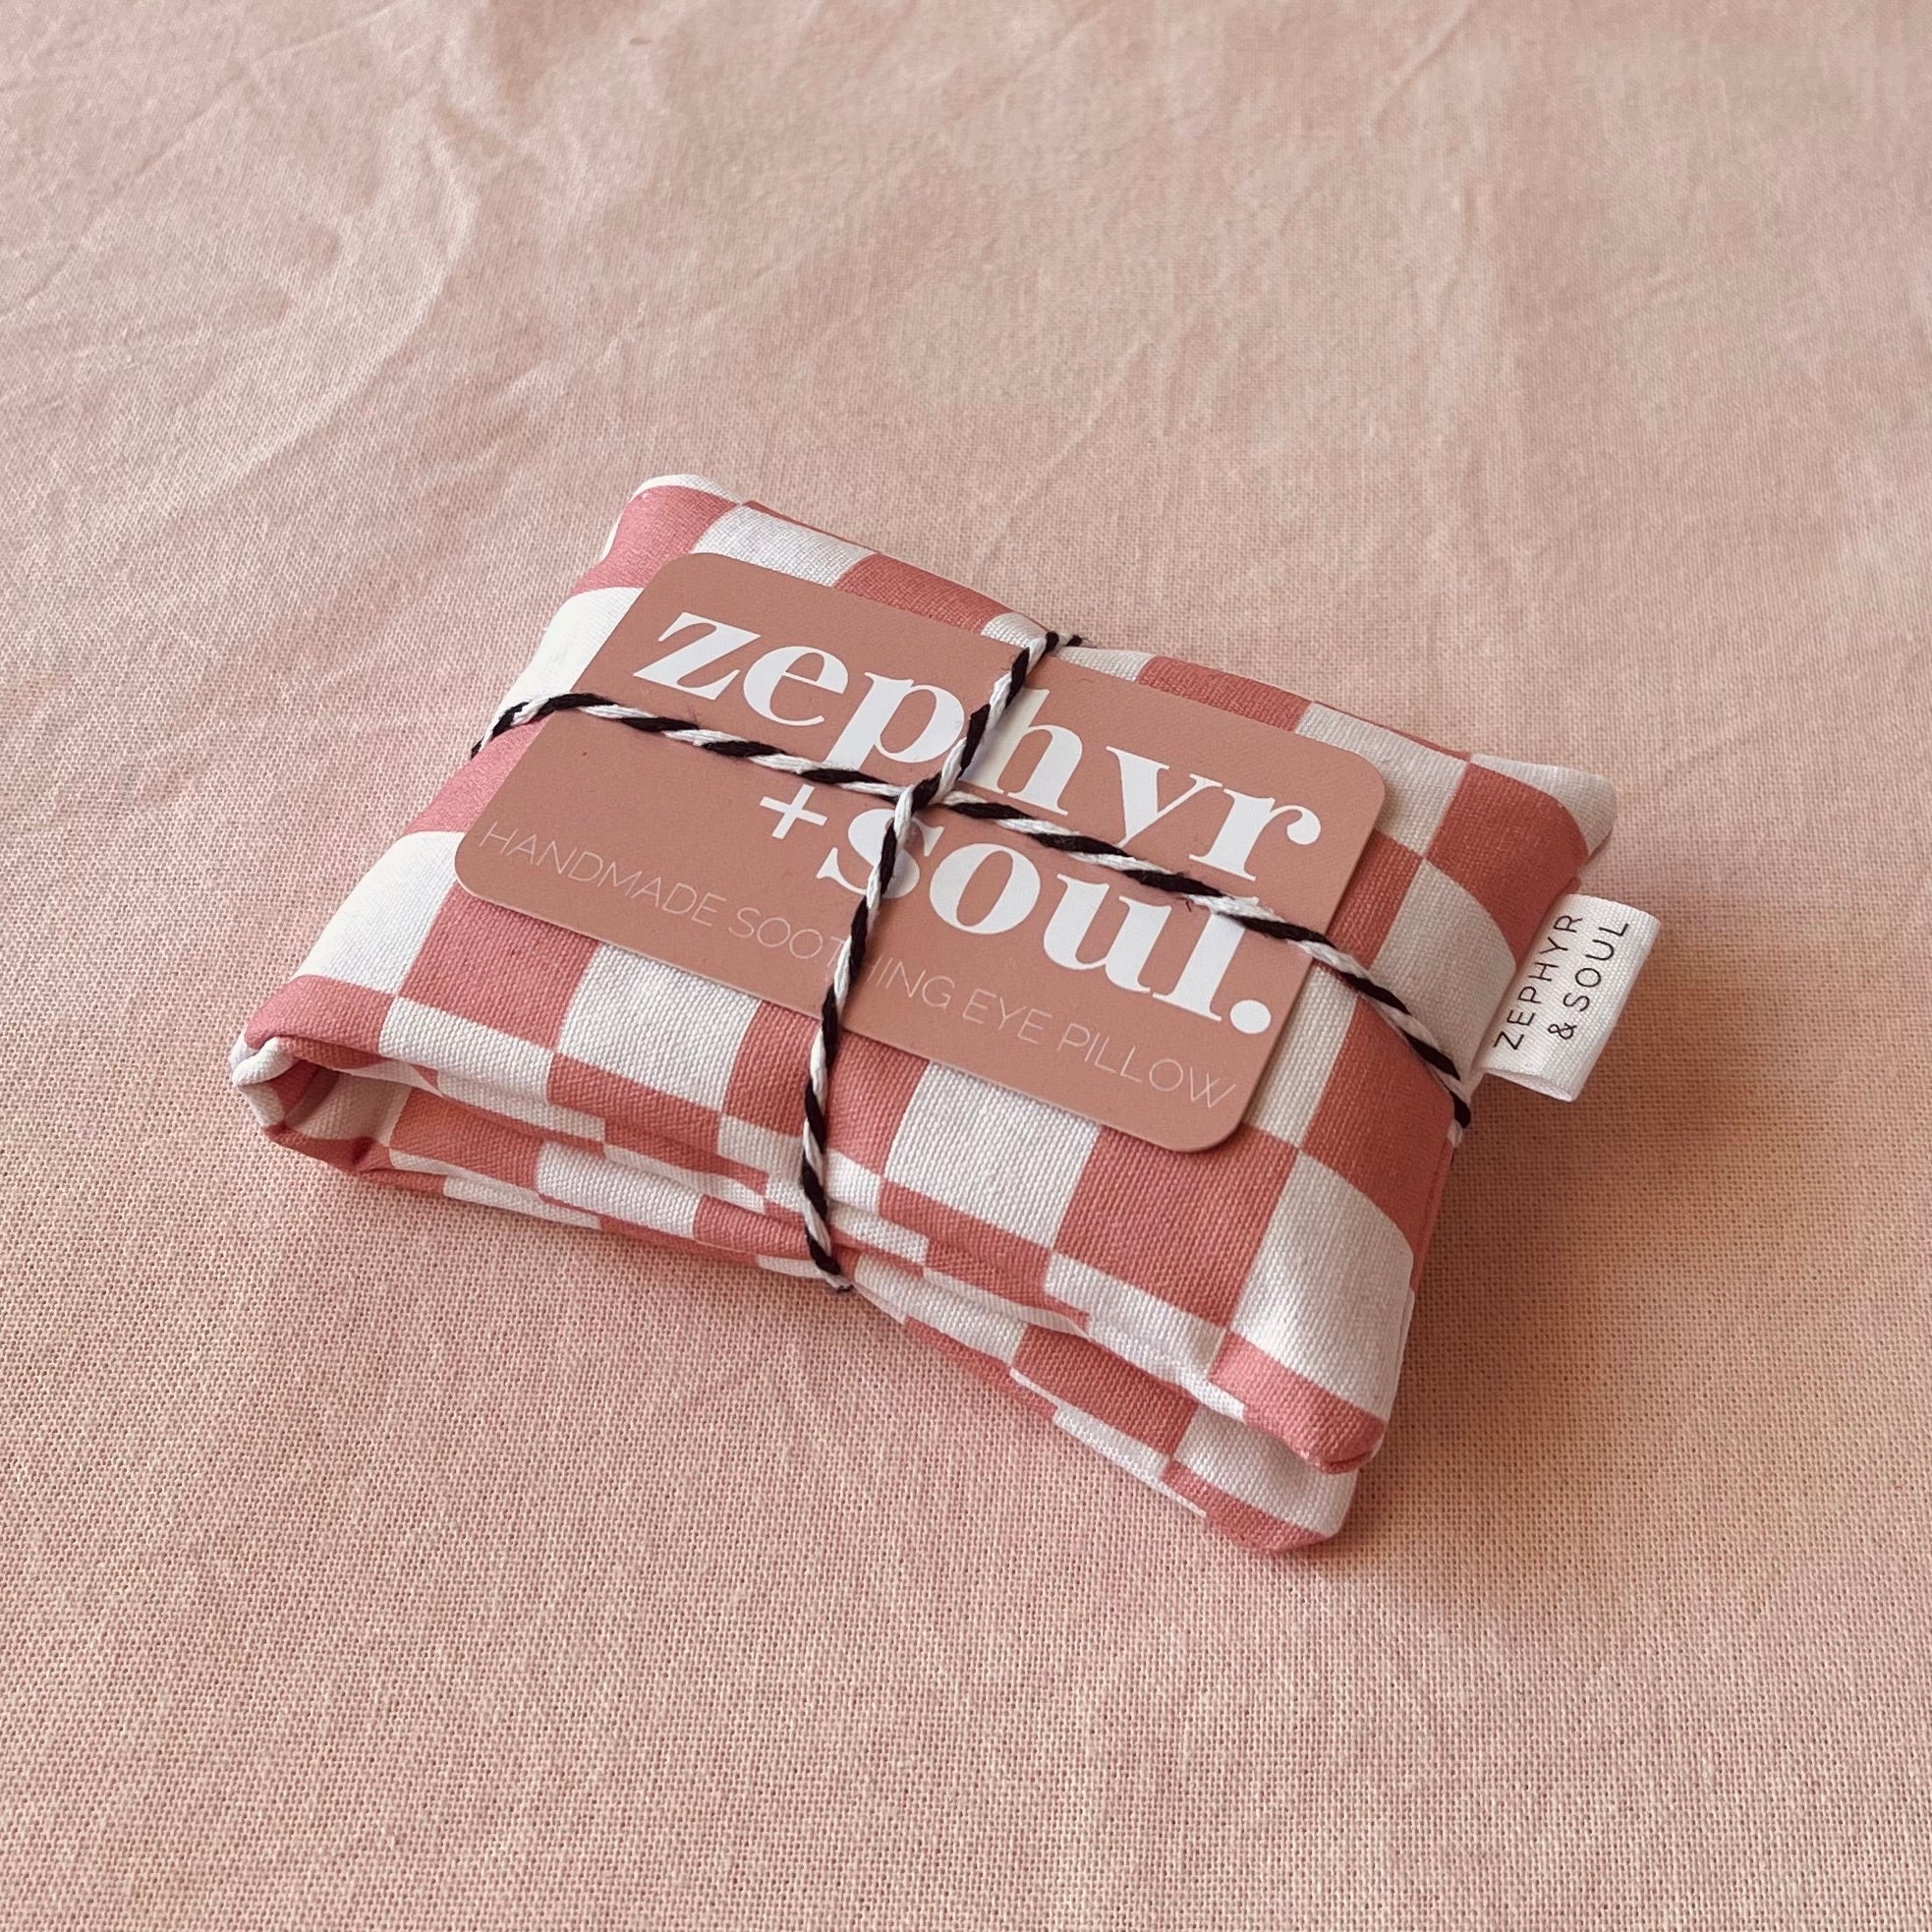 Zephyr + Soul Soothing Eye Pillow